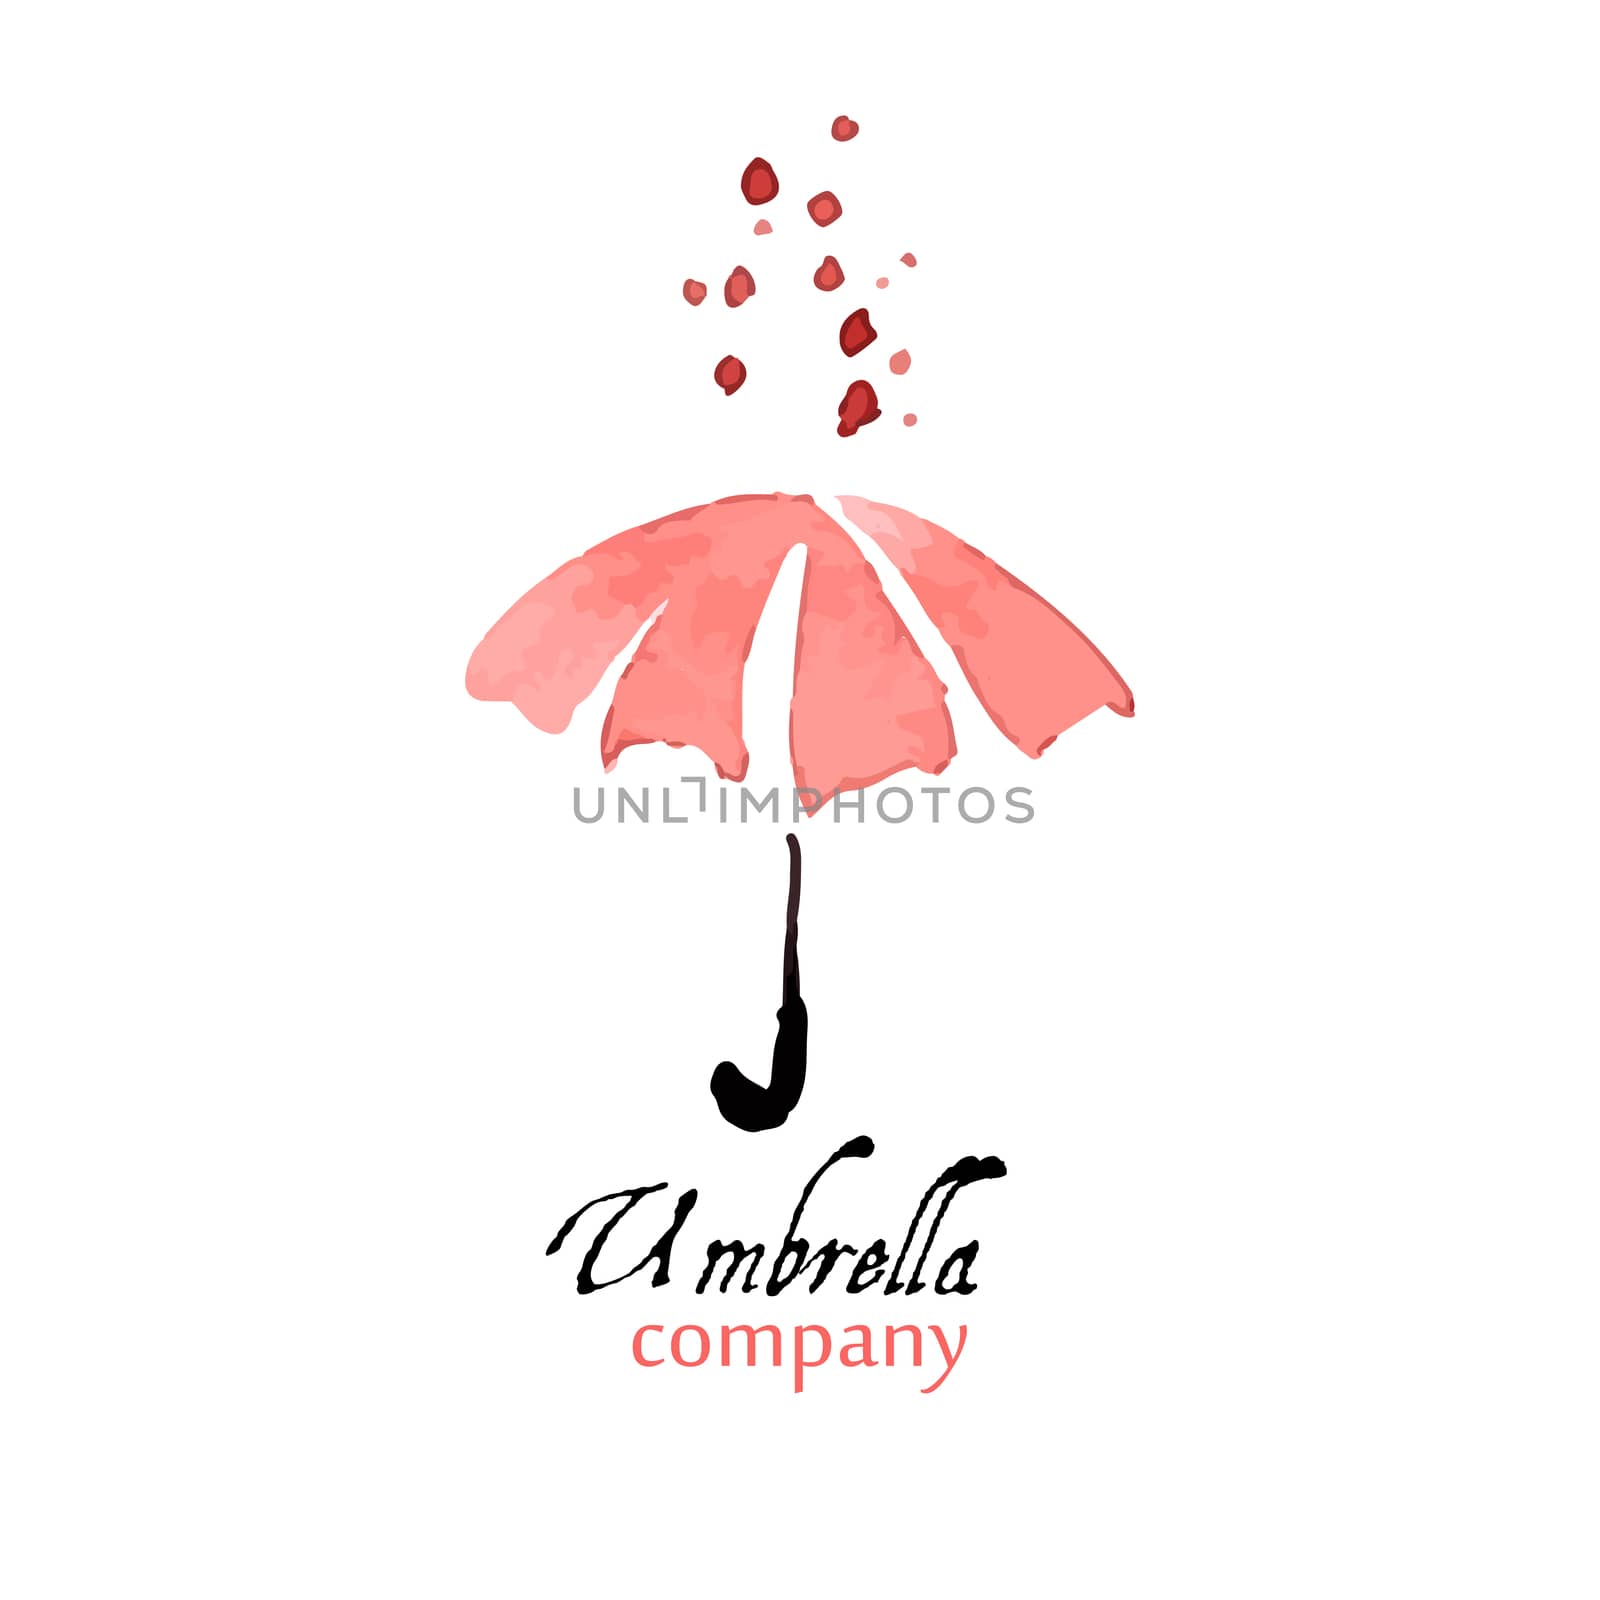 Design element pink umbrella with drops by Rasveta